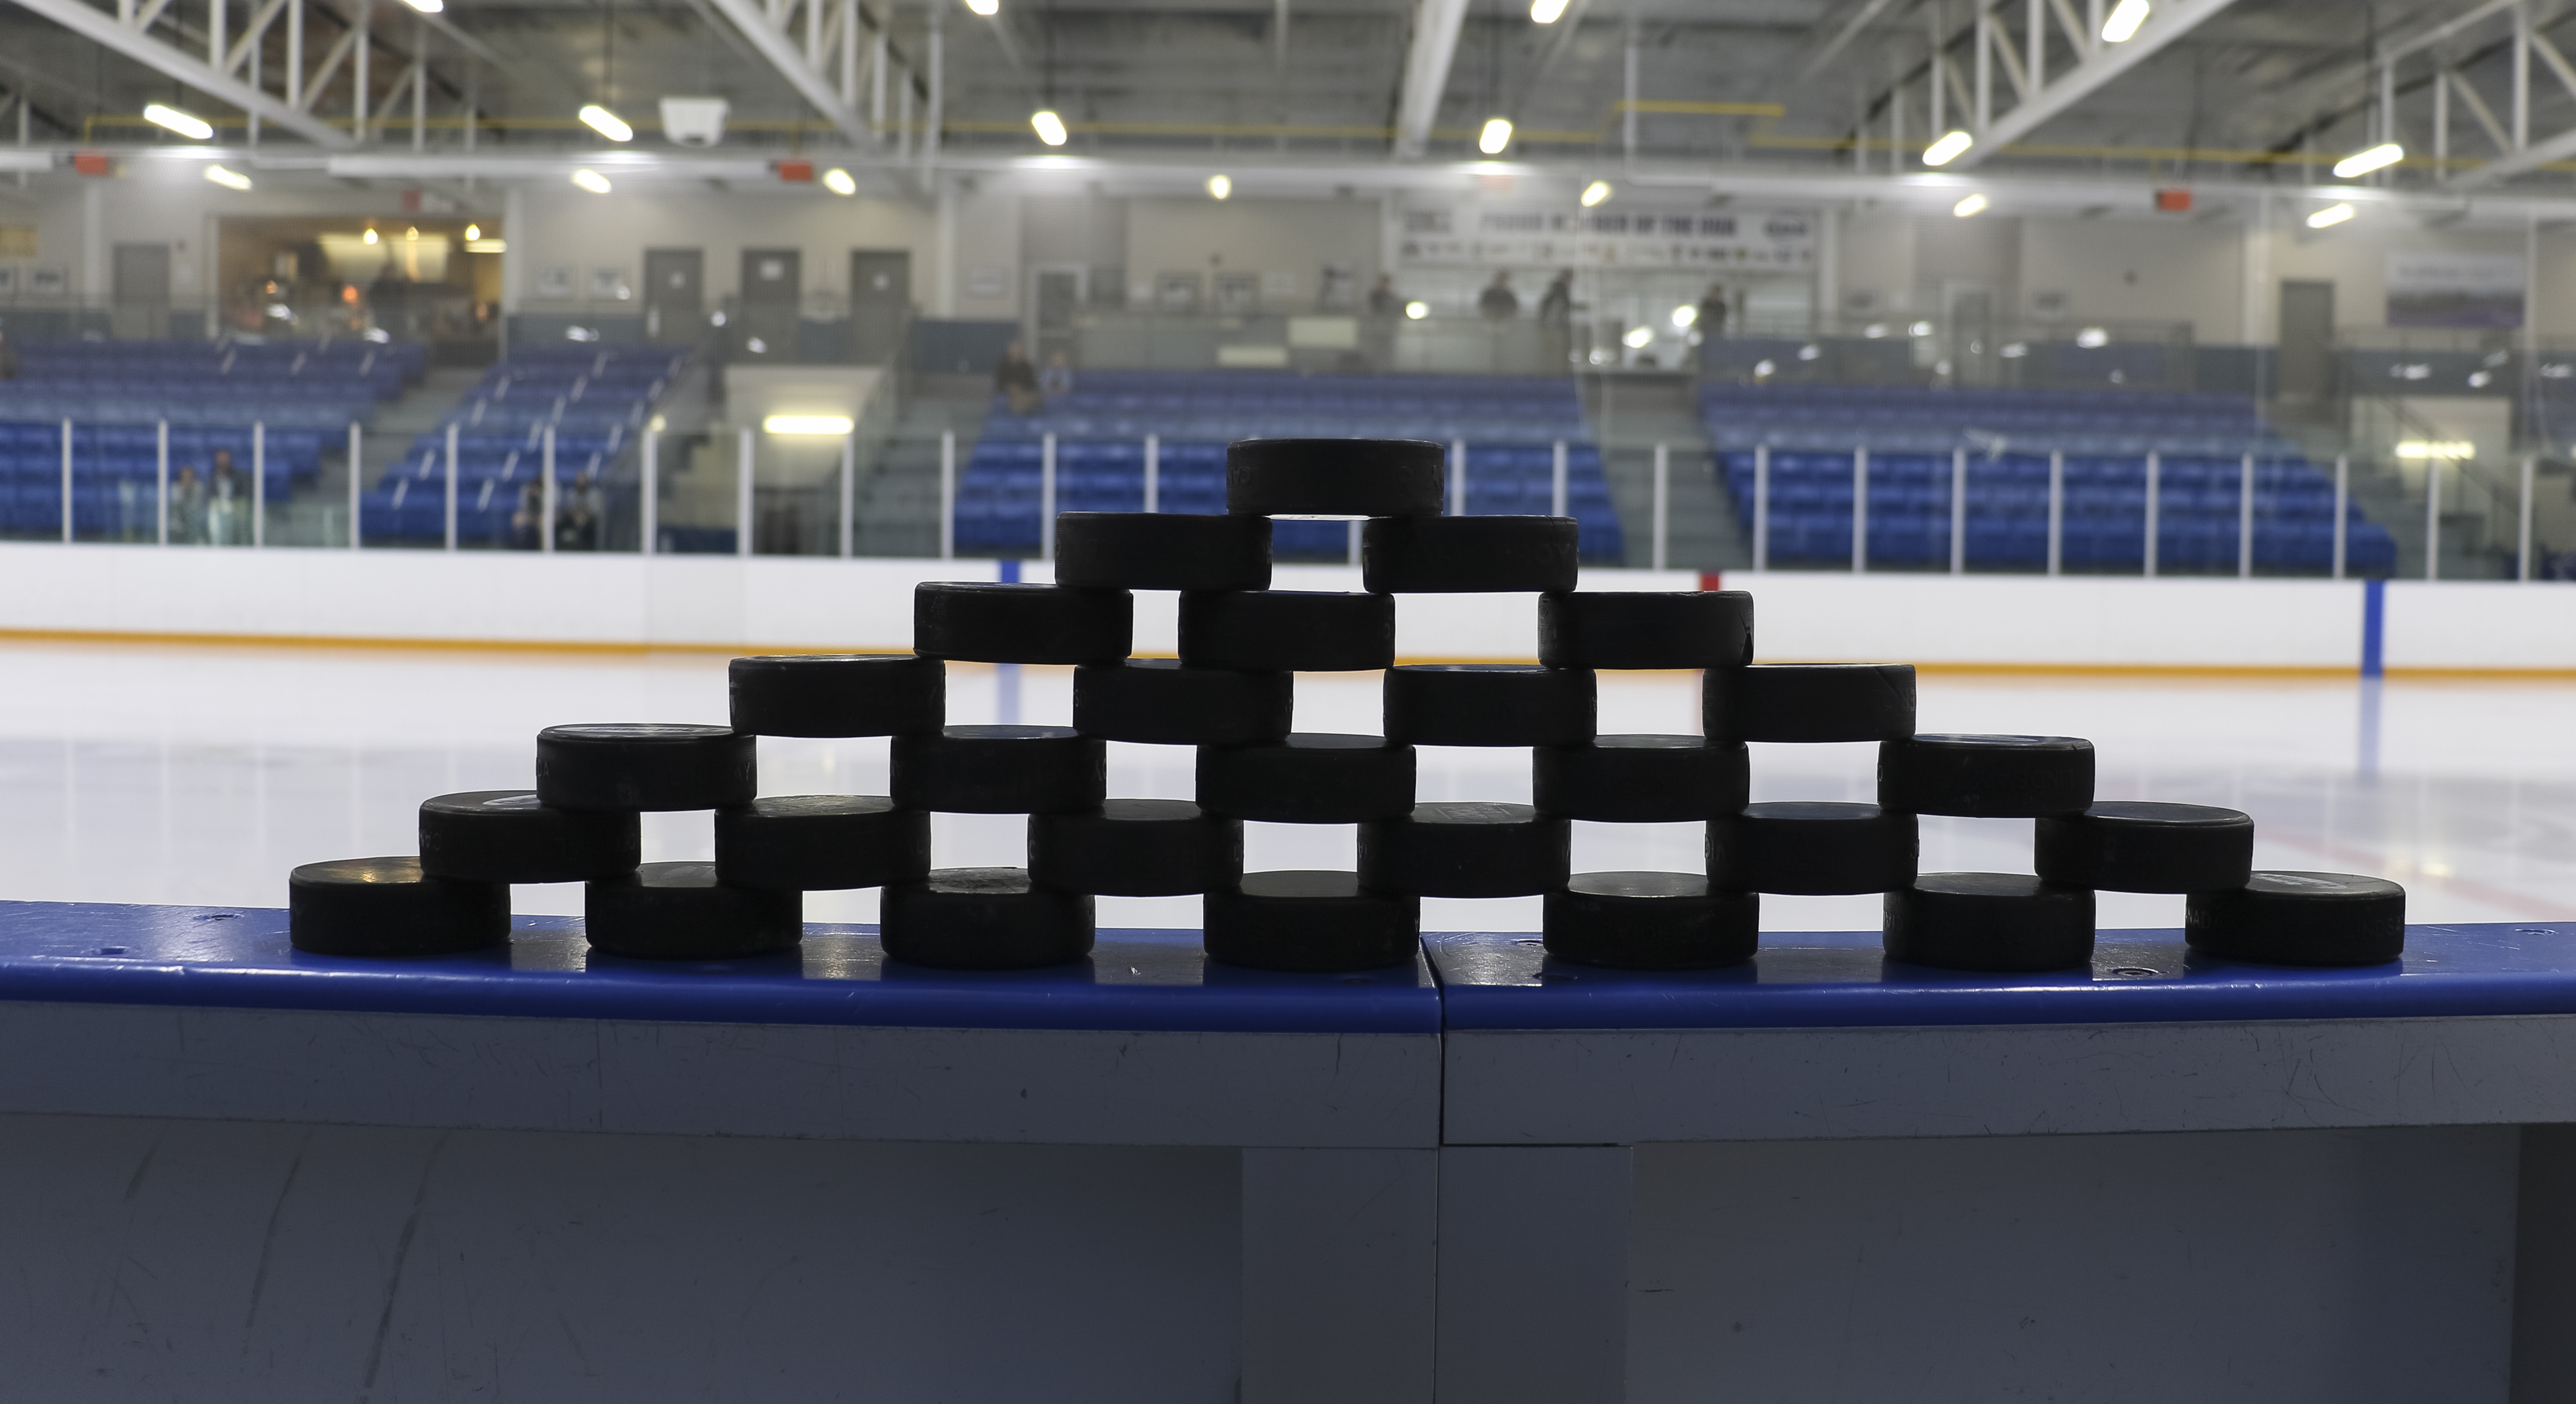 A pyramid of hockey pucks